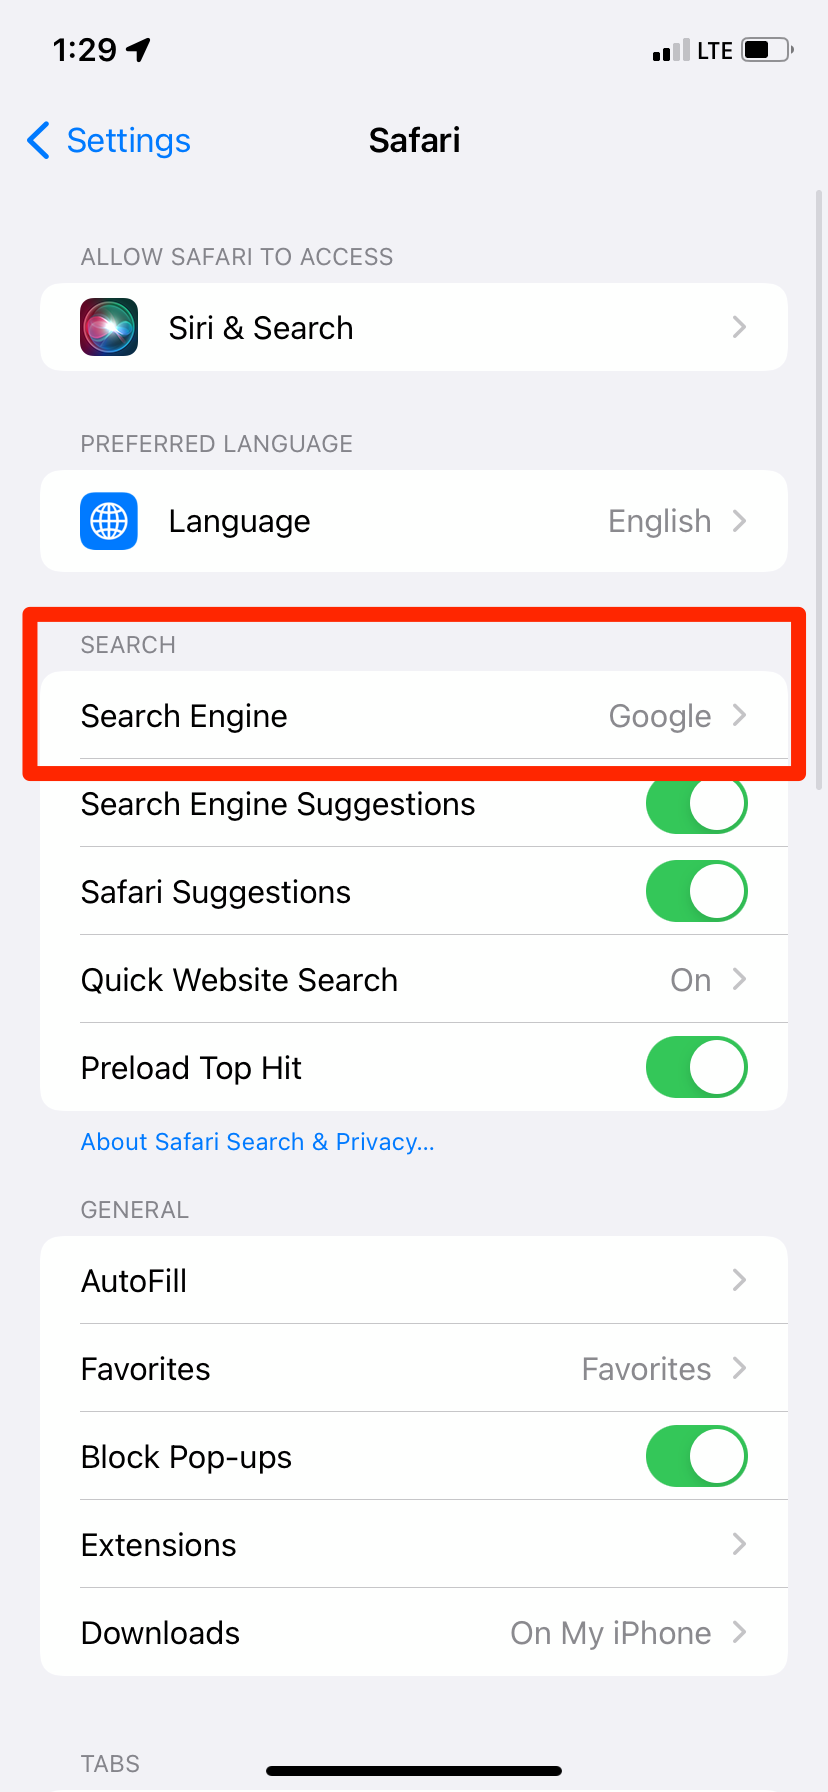 The Safari settings page in an iPhone's Settings app.